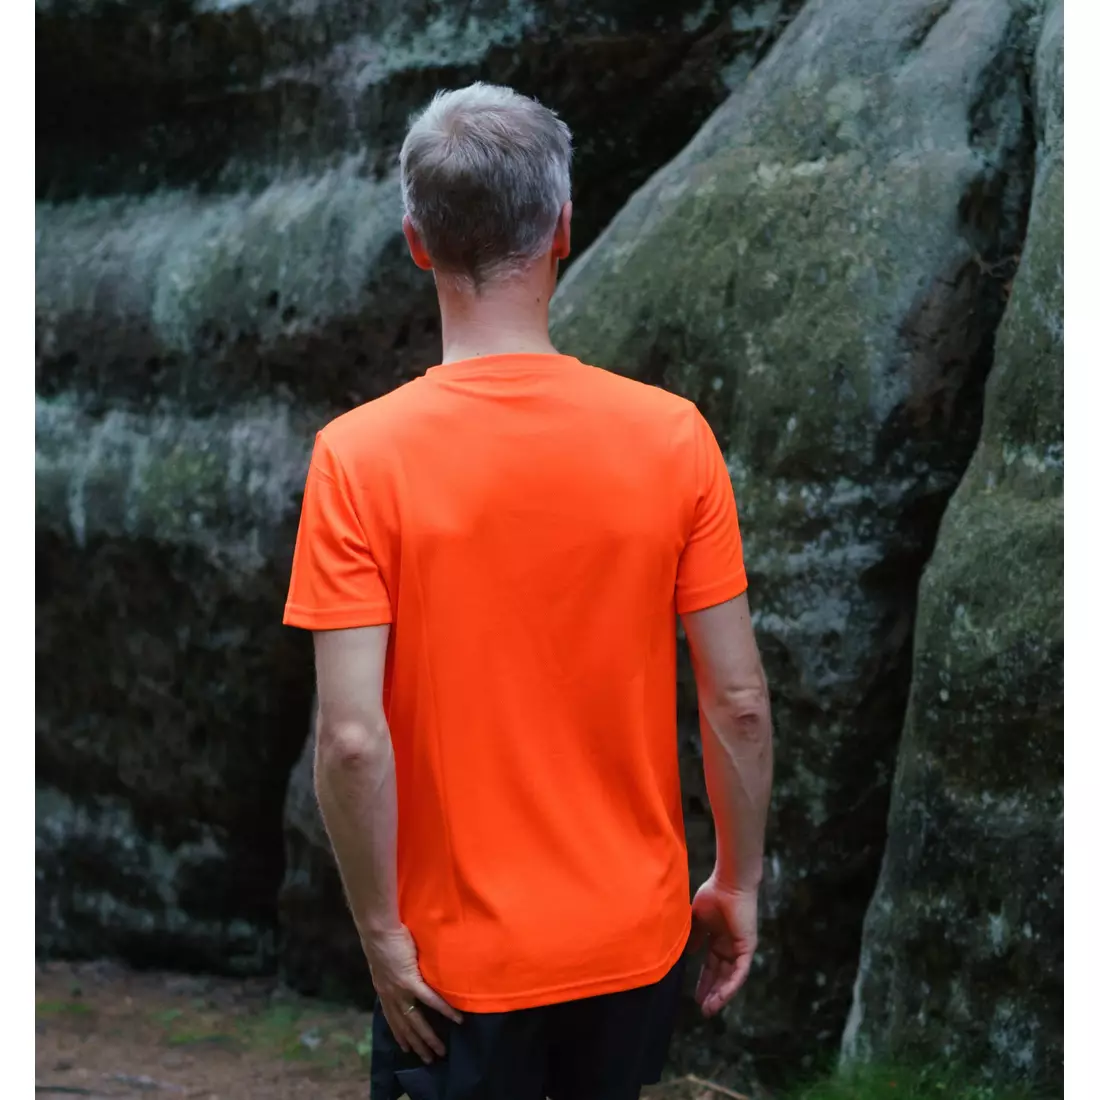 ROGELLI RUN PROMOTION férfi rövid ujjú sporting, narancssárga